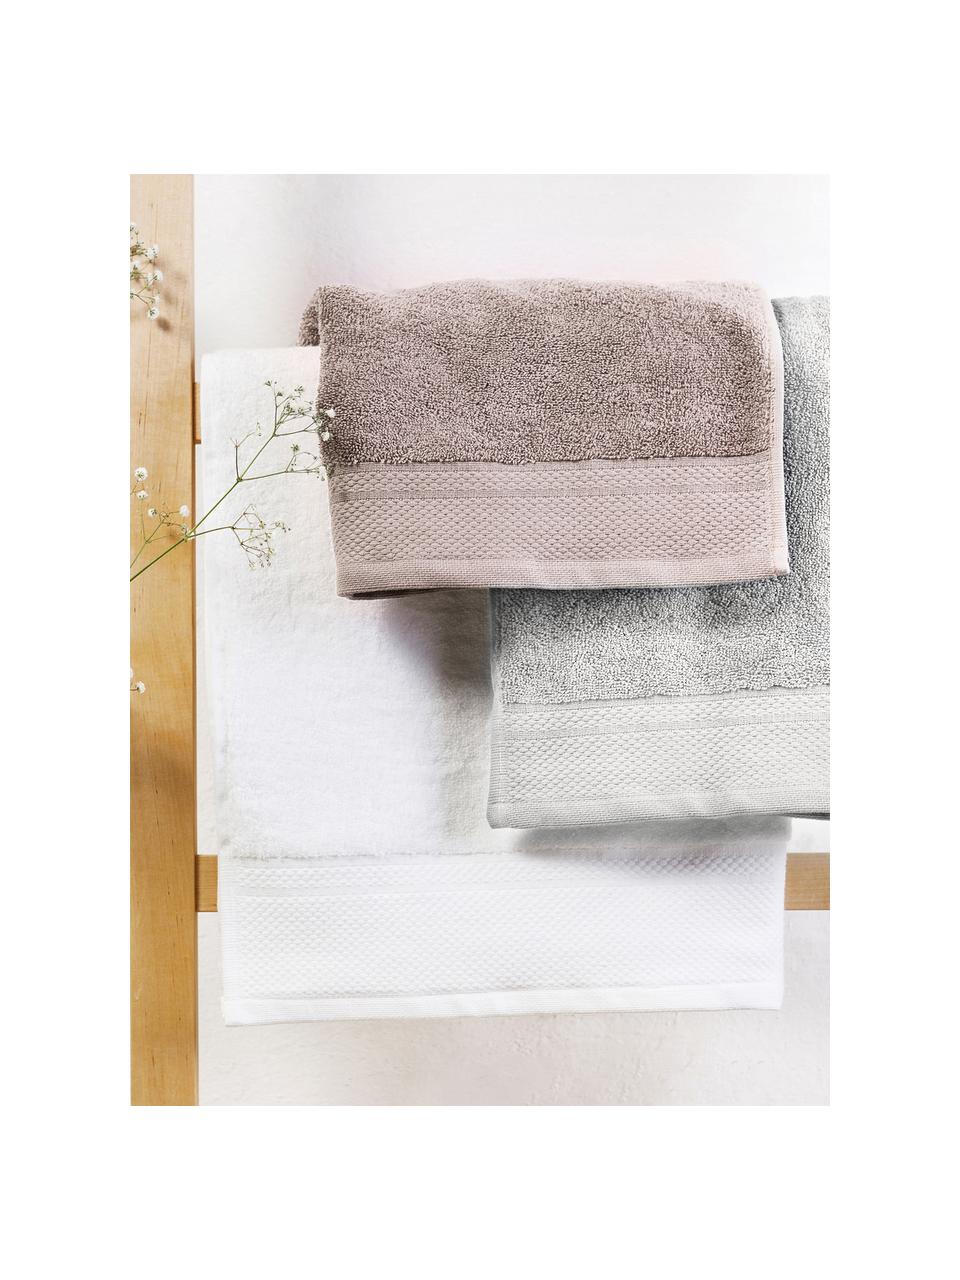 Set de toallas de algodón ecológico Premium, 3 uds., 100% algodón ecológico con certificado GOTS (por GCL International, GCL-300517)
Gramaje superior 600 g/m², Gris claro, Set de diferentes tamaños